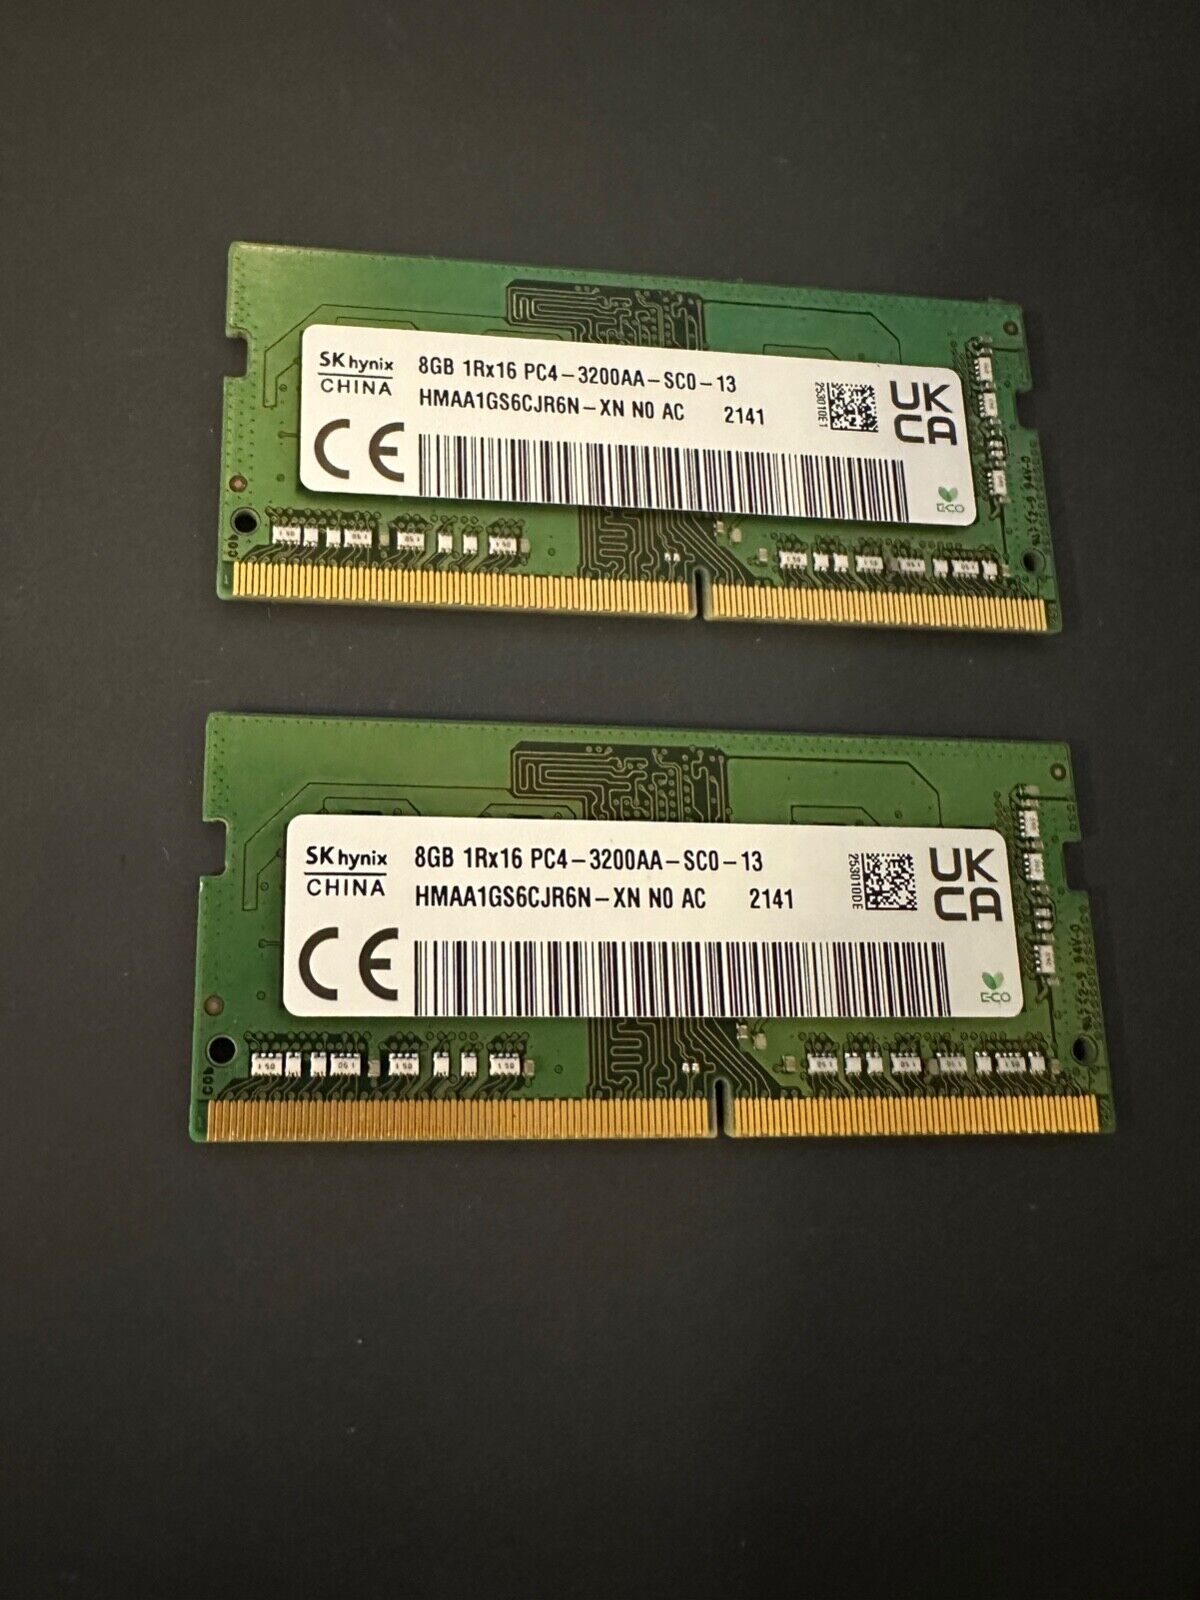 Dell SK Hynix 16GB Kit (2X8GB) 1Rx16 PC4-3200AA DDR4 HMAA1GS6CJR6N-XN